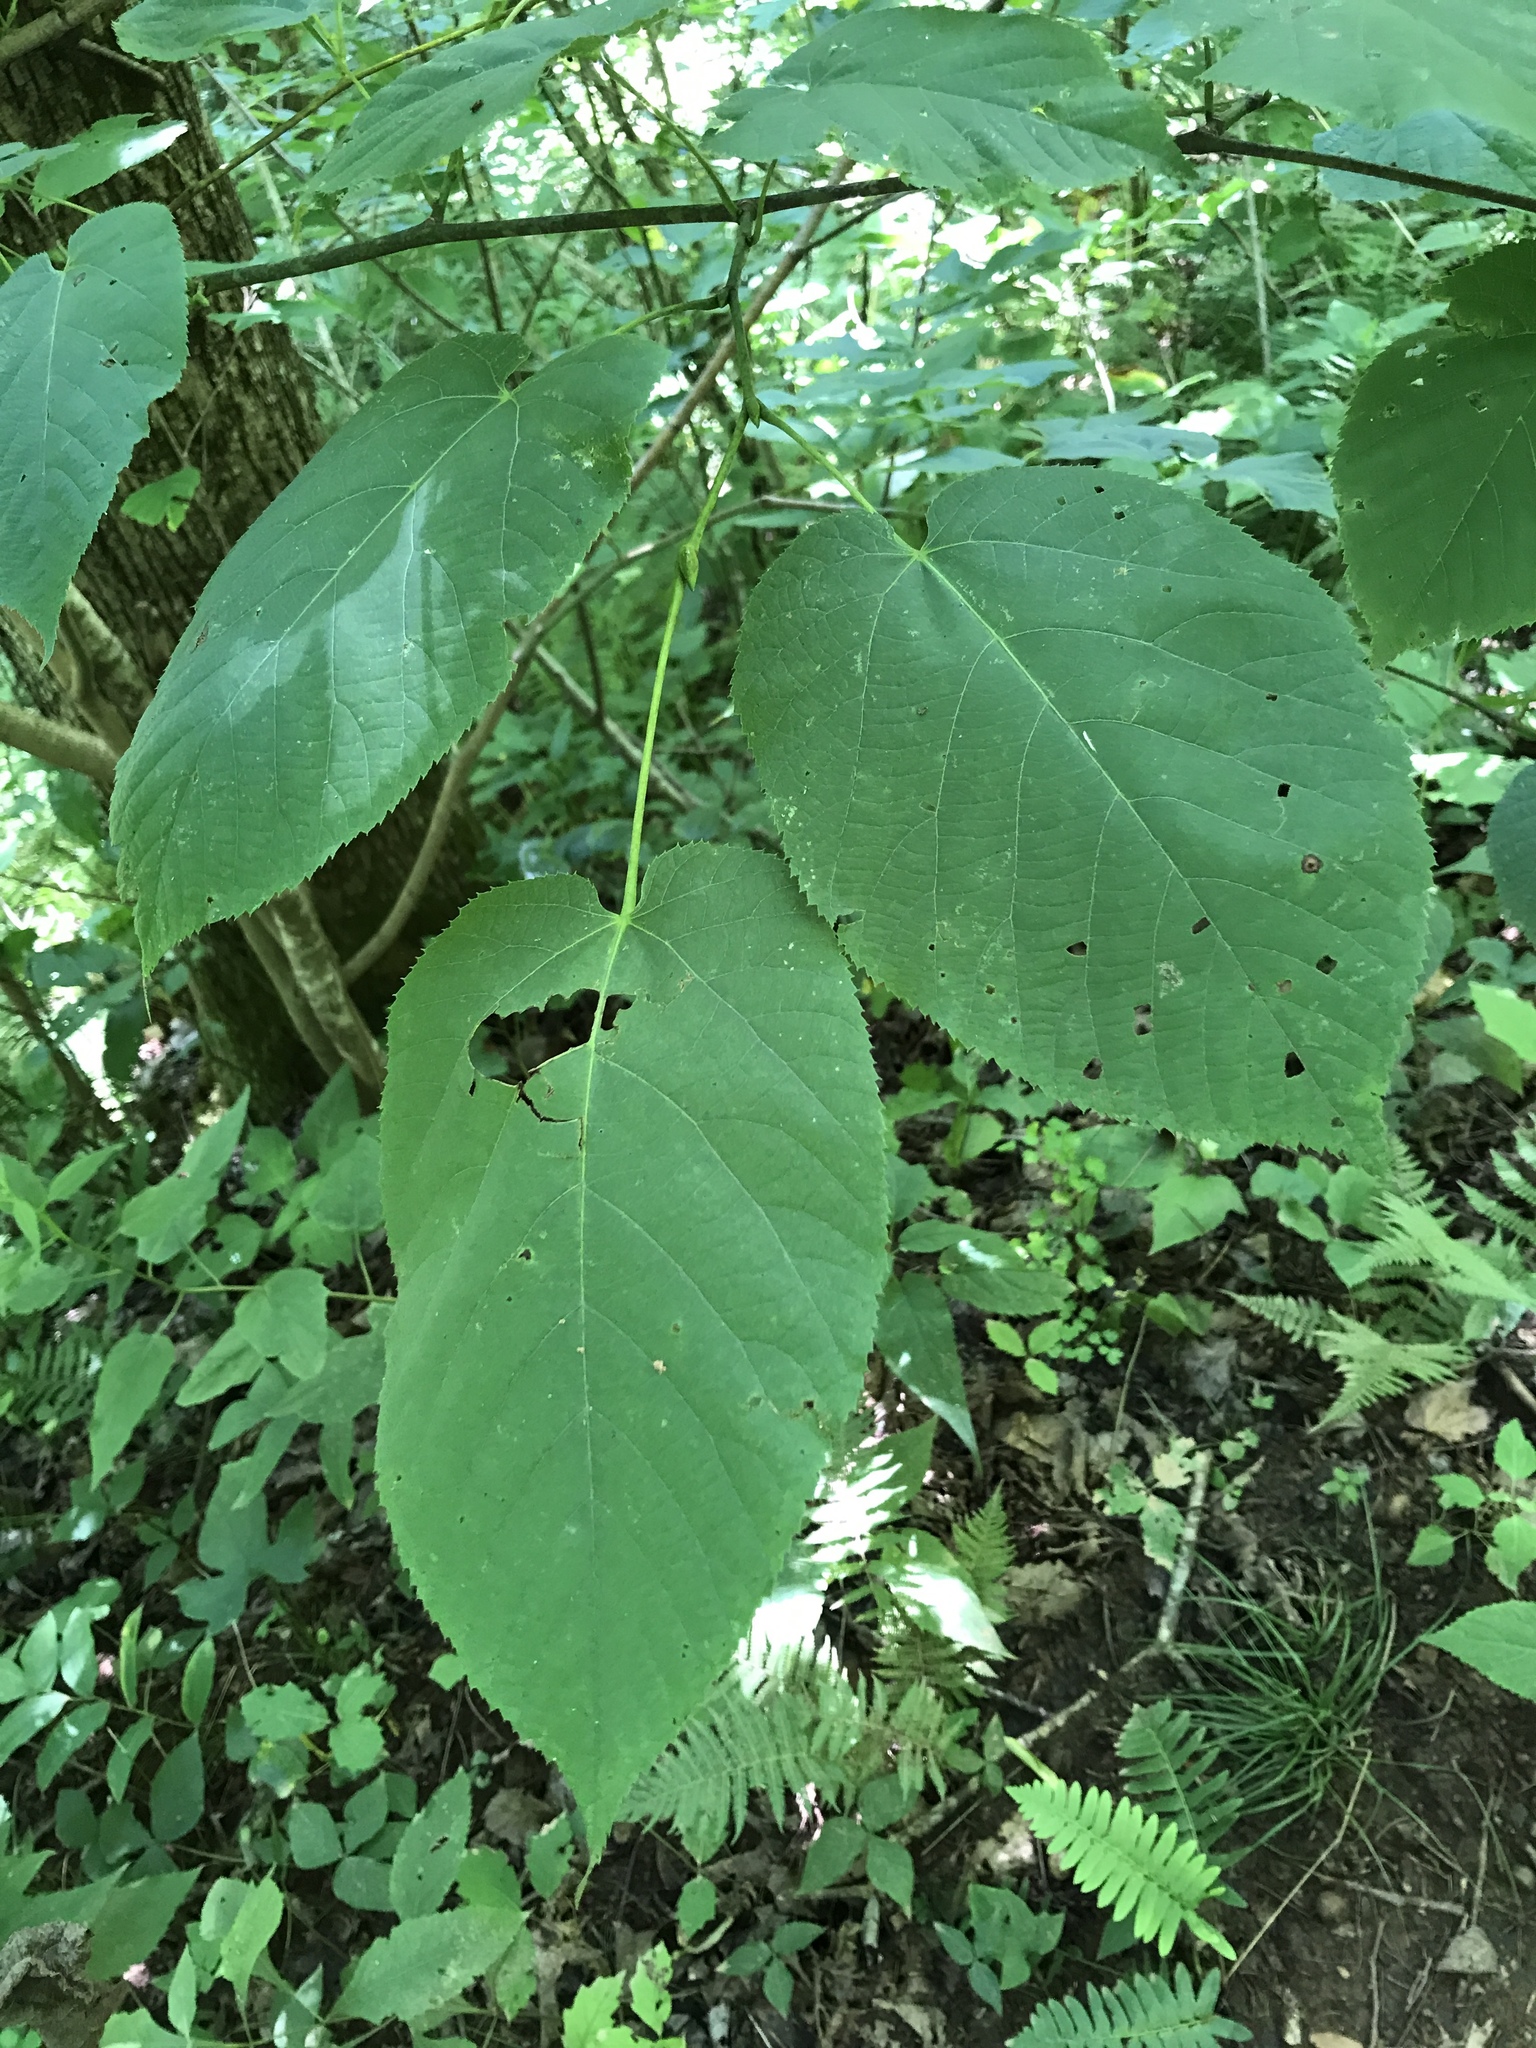 White Basswood (Tilia americana var. heterophylla)